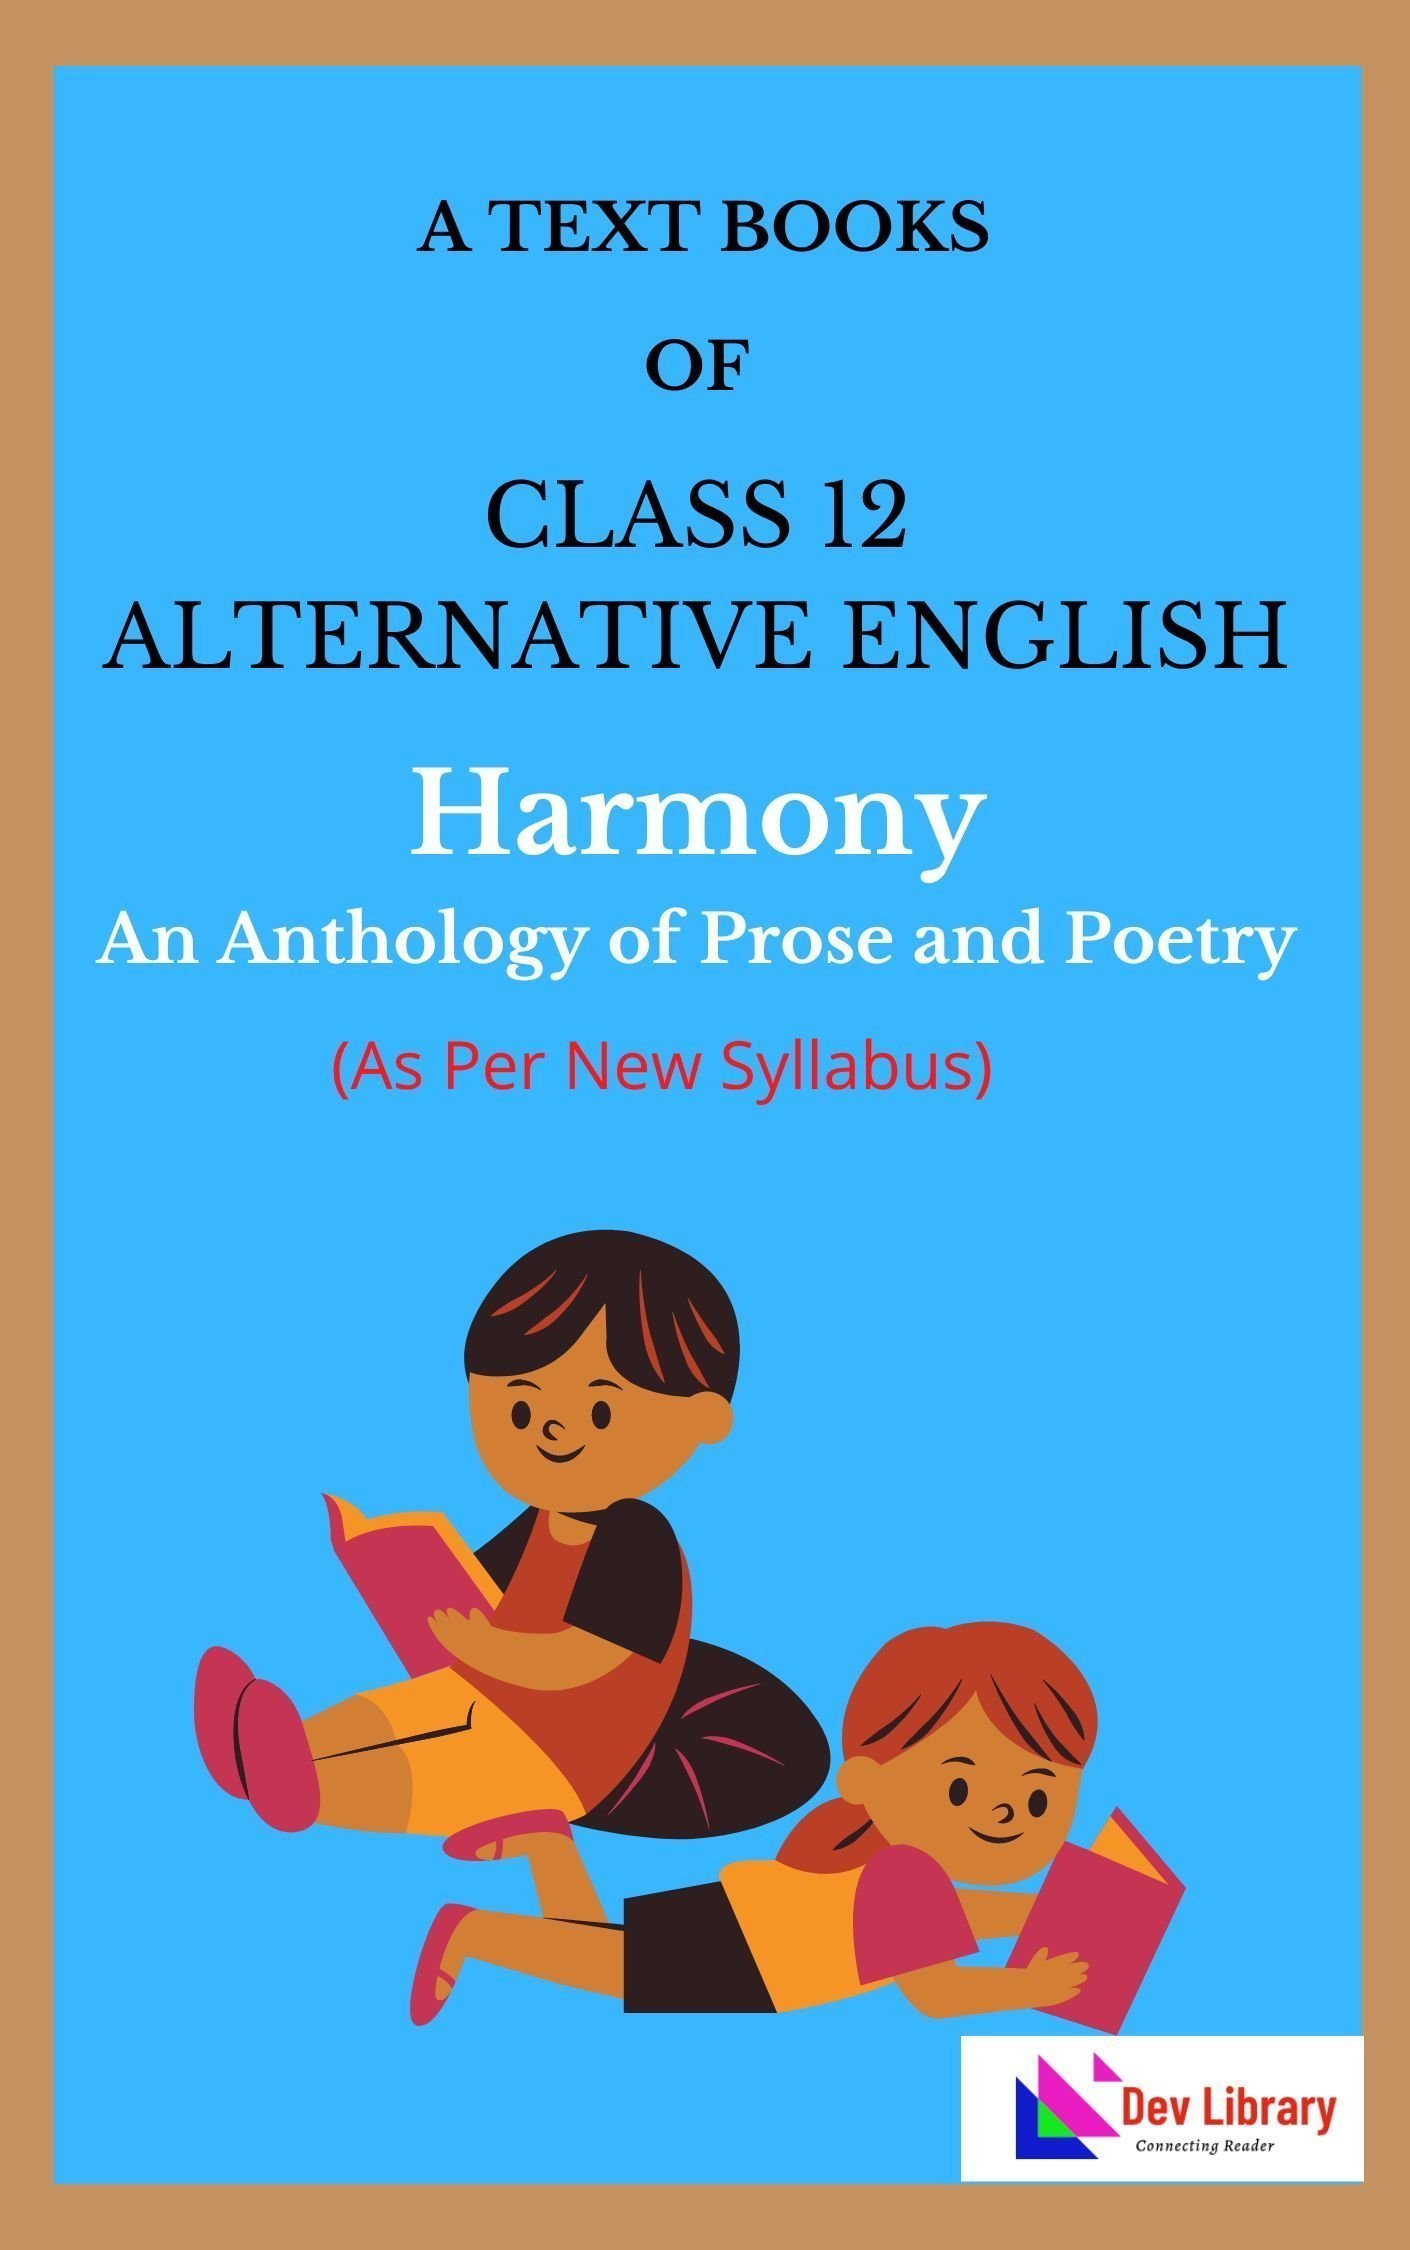 Class 12 Alternative English New Book